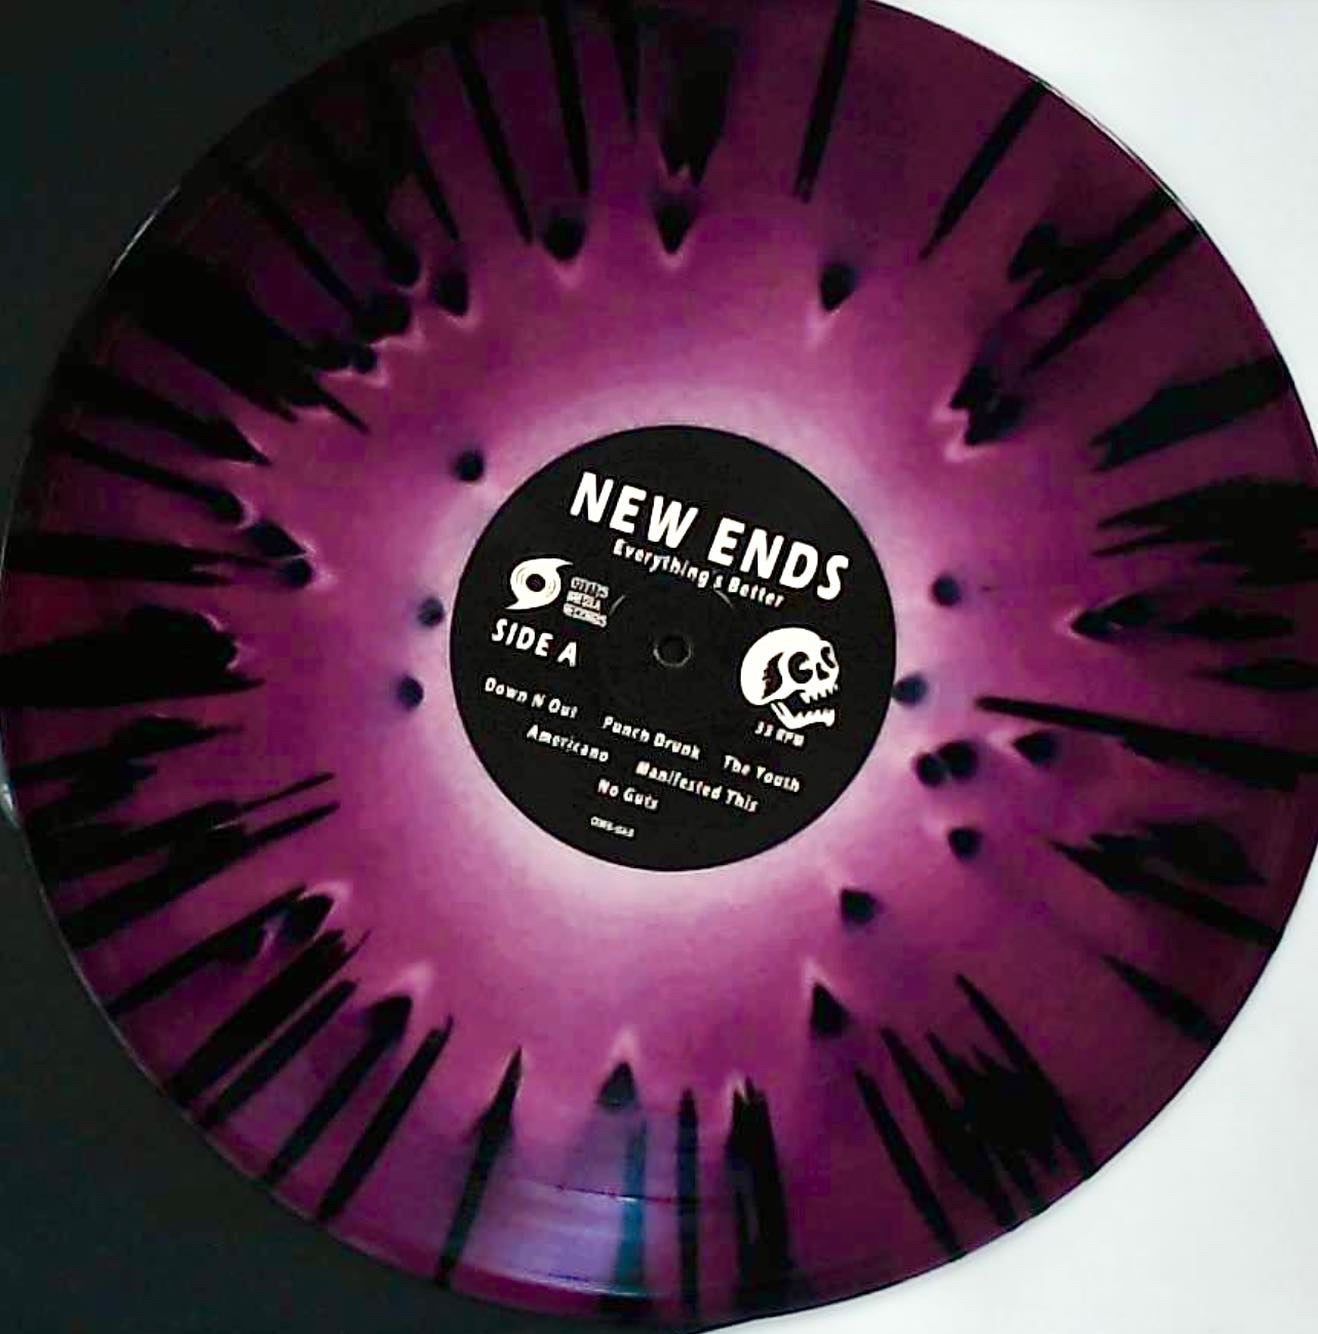 OMR-060 NEW ENDS “Everything’s Better” LP, CD, Tape